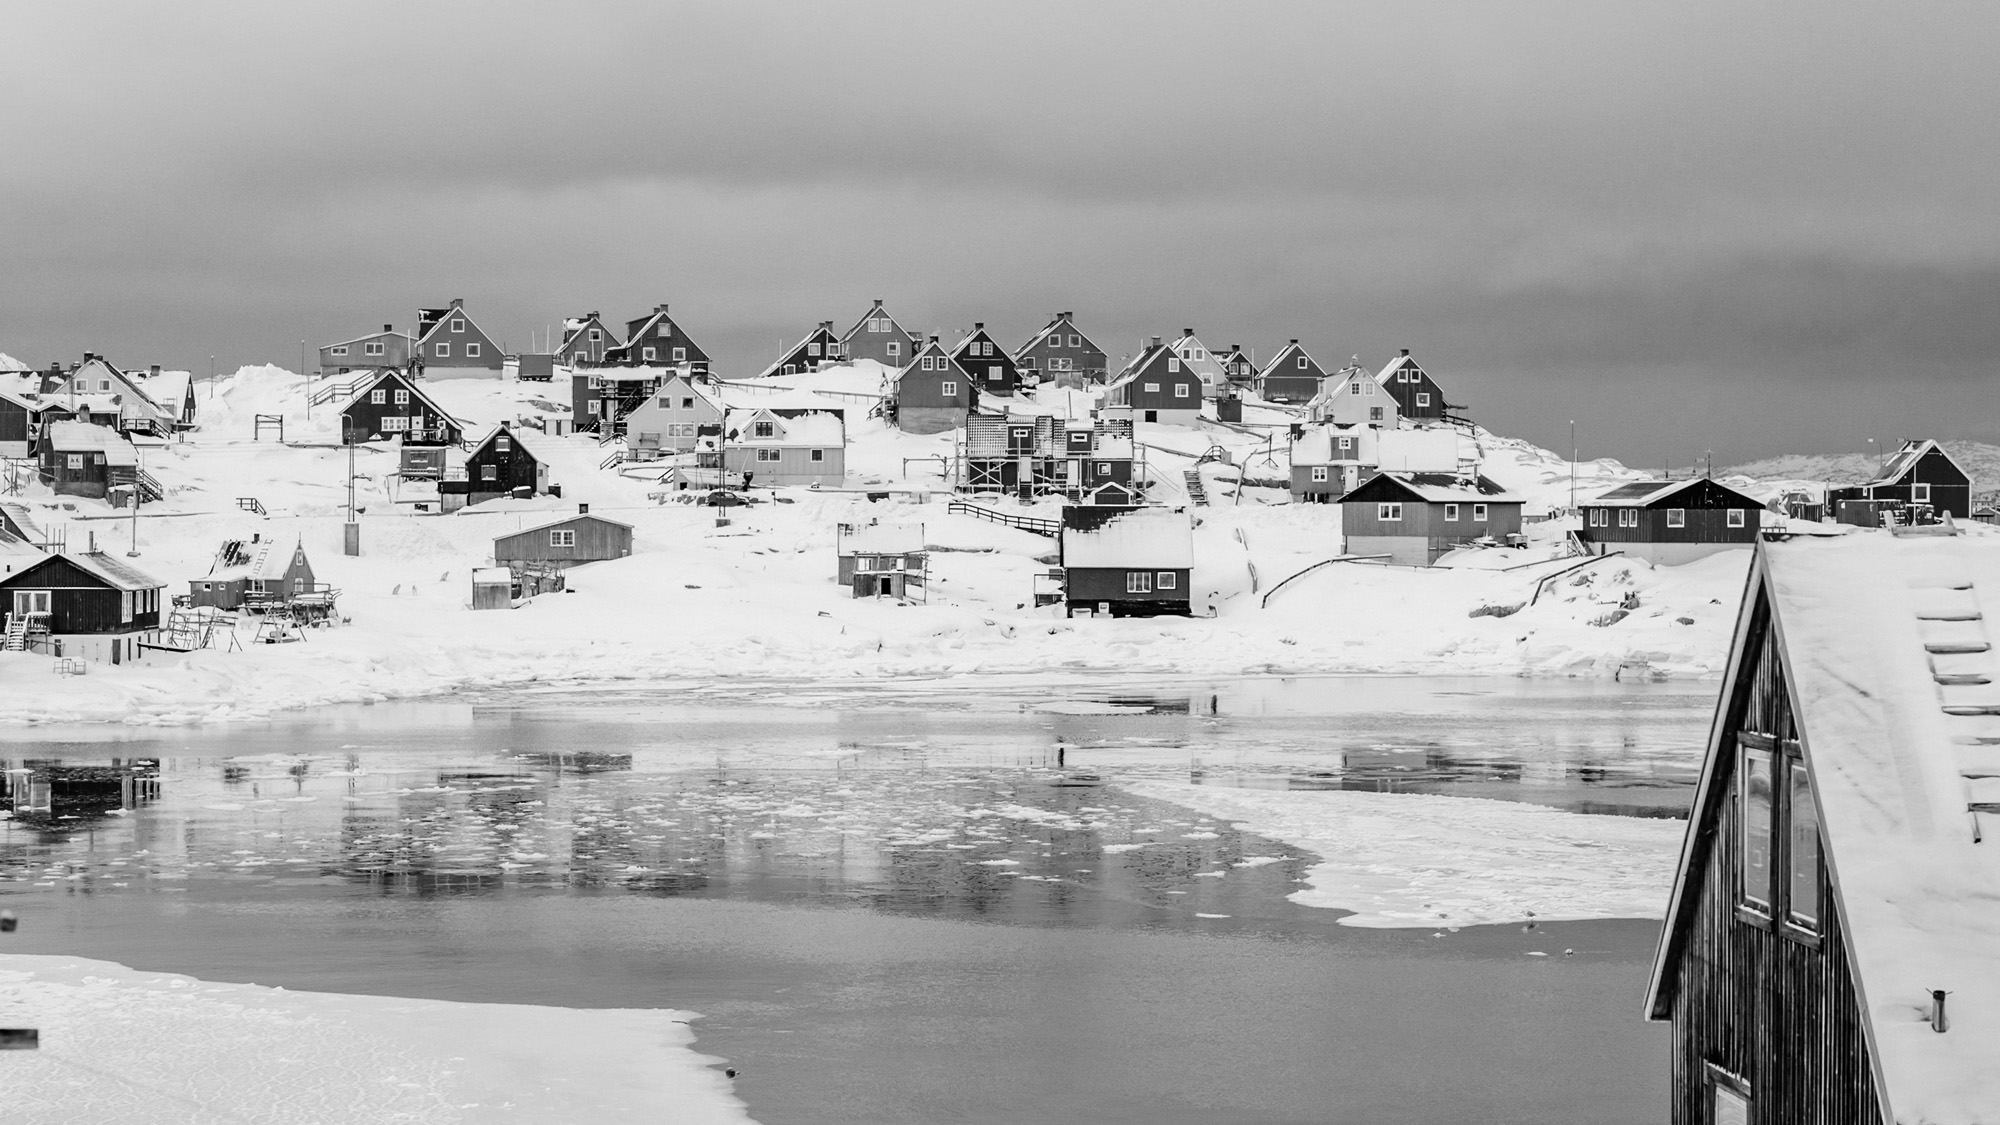 Credit: Filip Gielda - Visit Greenland/Newsflash